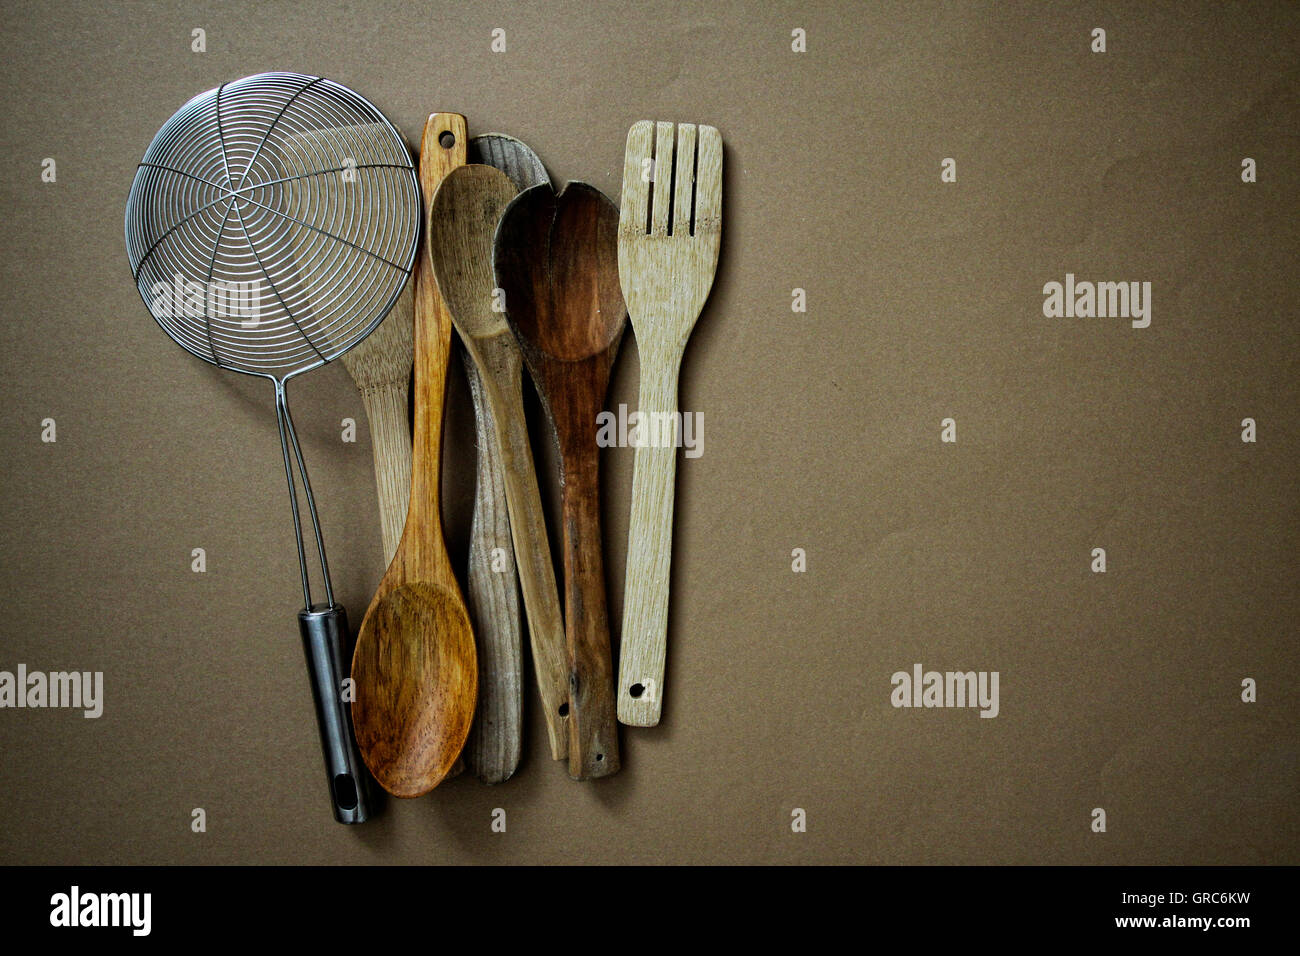 Arnese cucchiaio da cucina in legno nutrizione dieta alimentare quantità forcella metallica Foto Stock